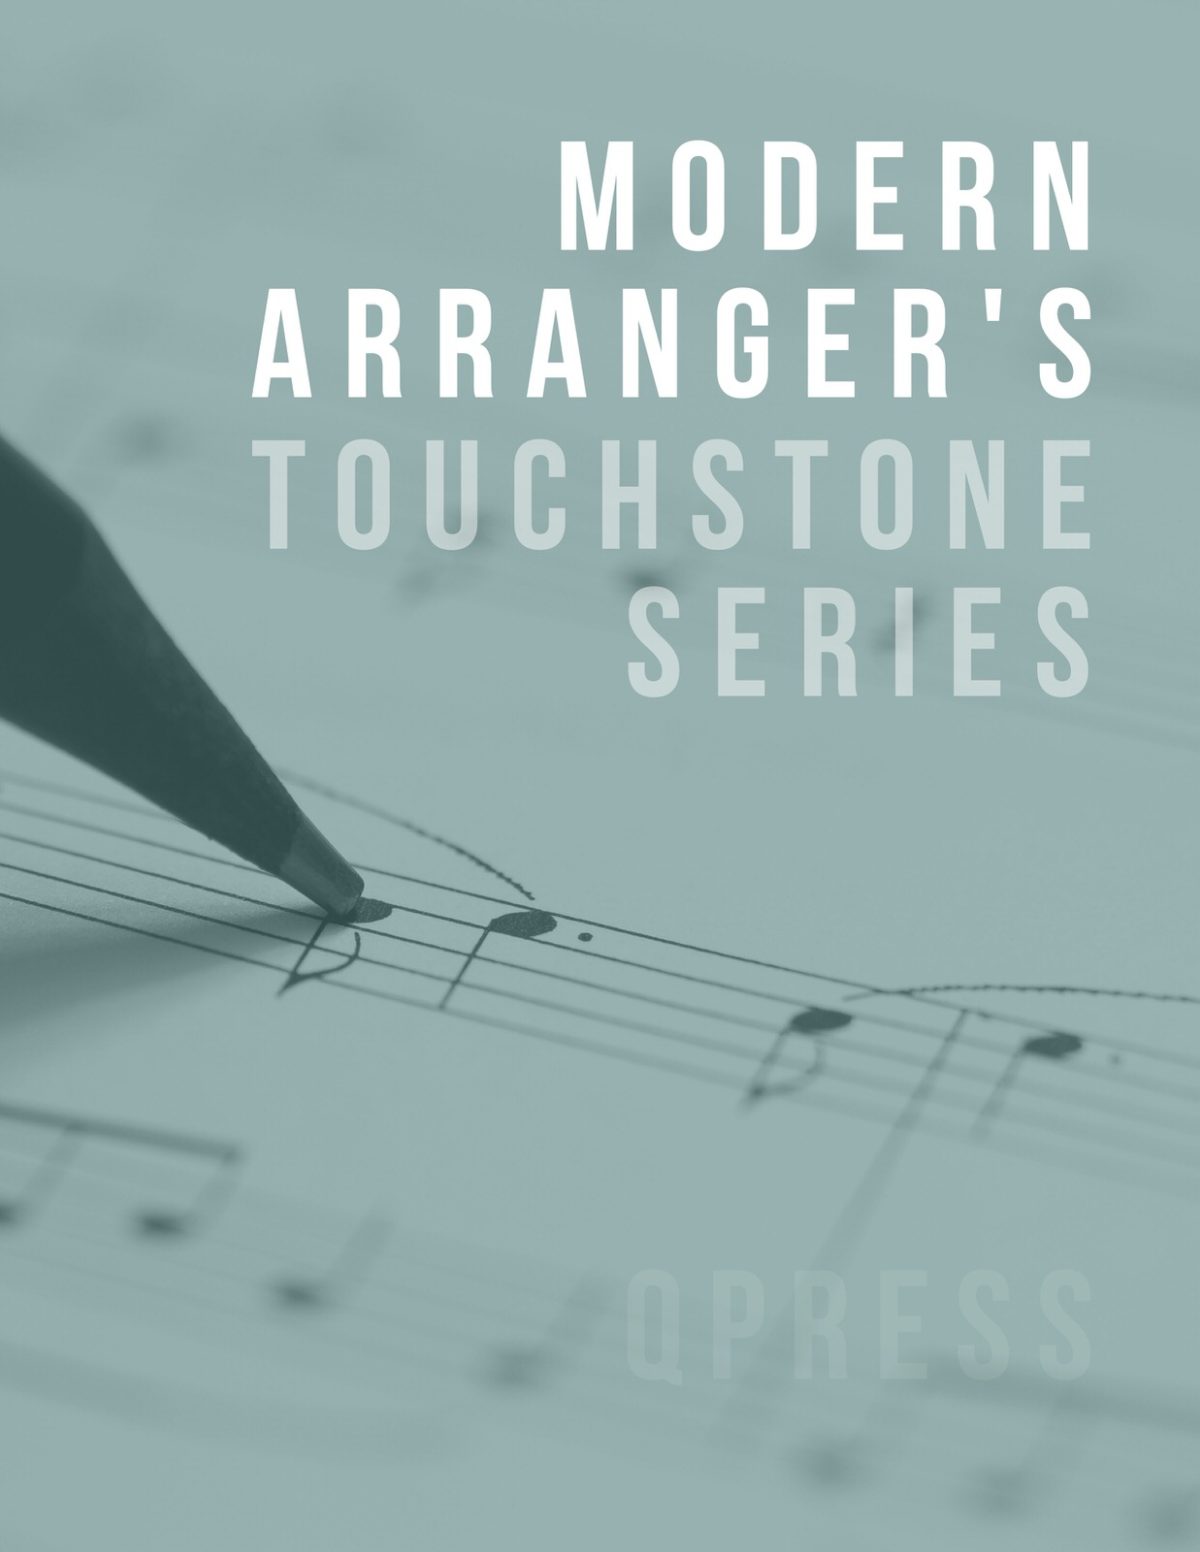 modern arranger's touchstone series-1